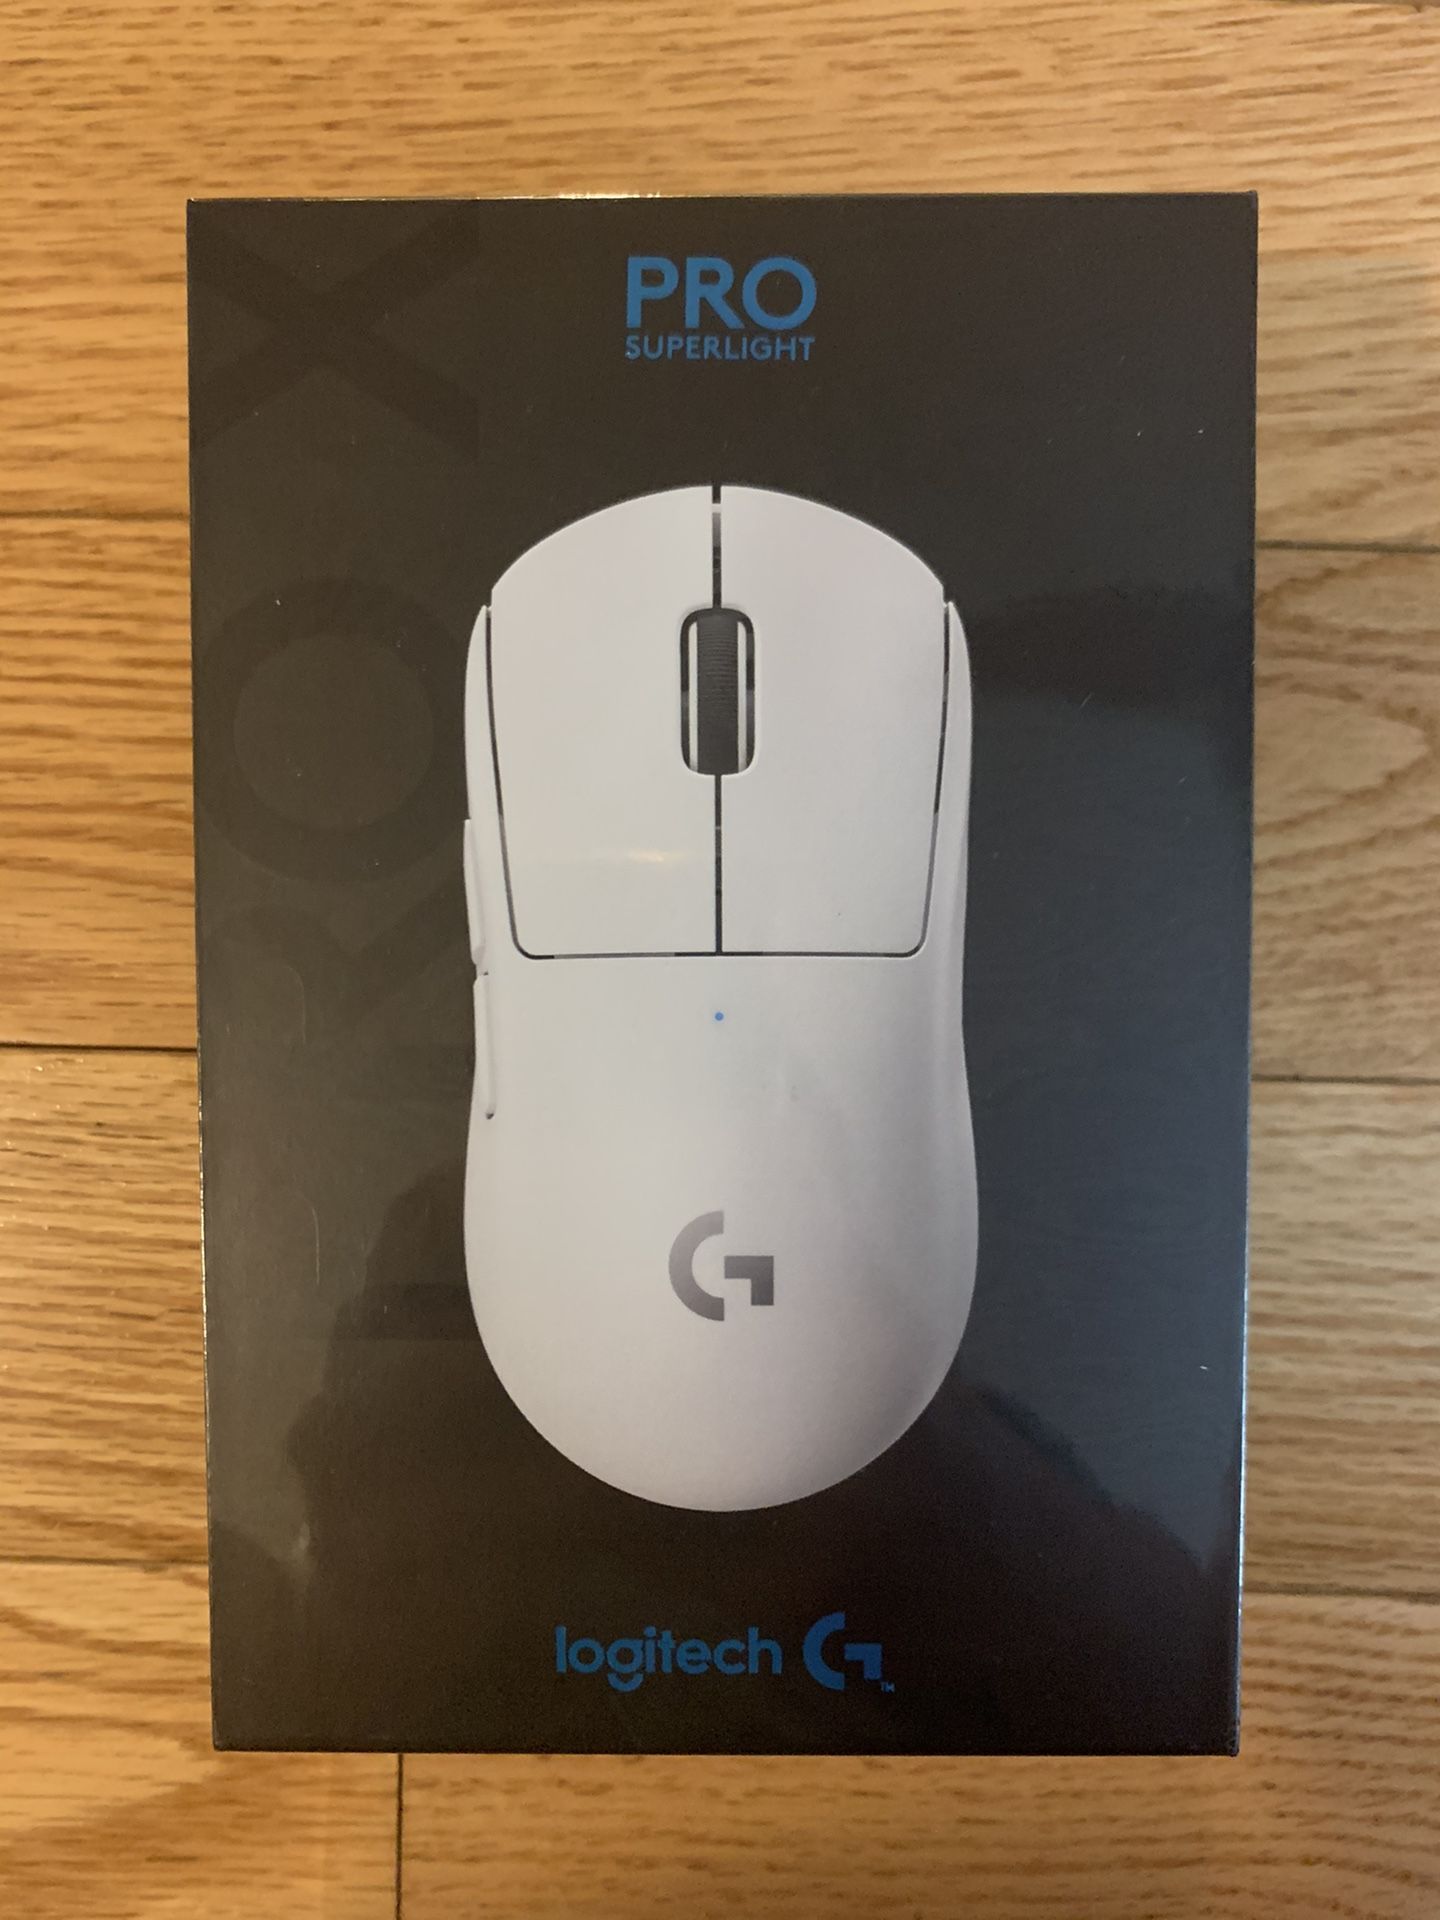 New Logitech Pro Super Light Mouse - White